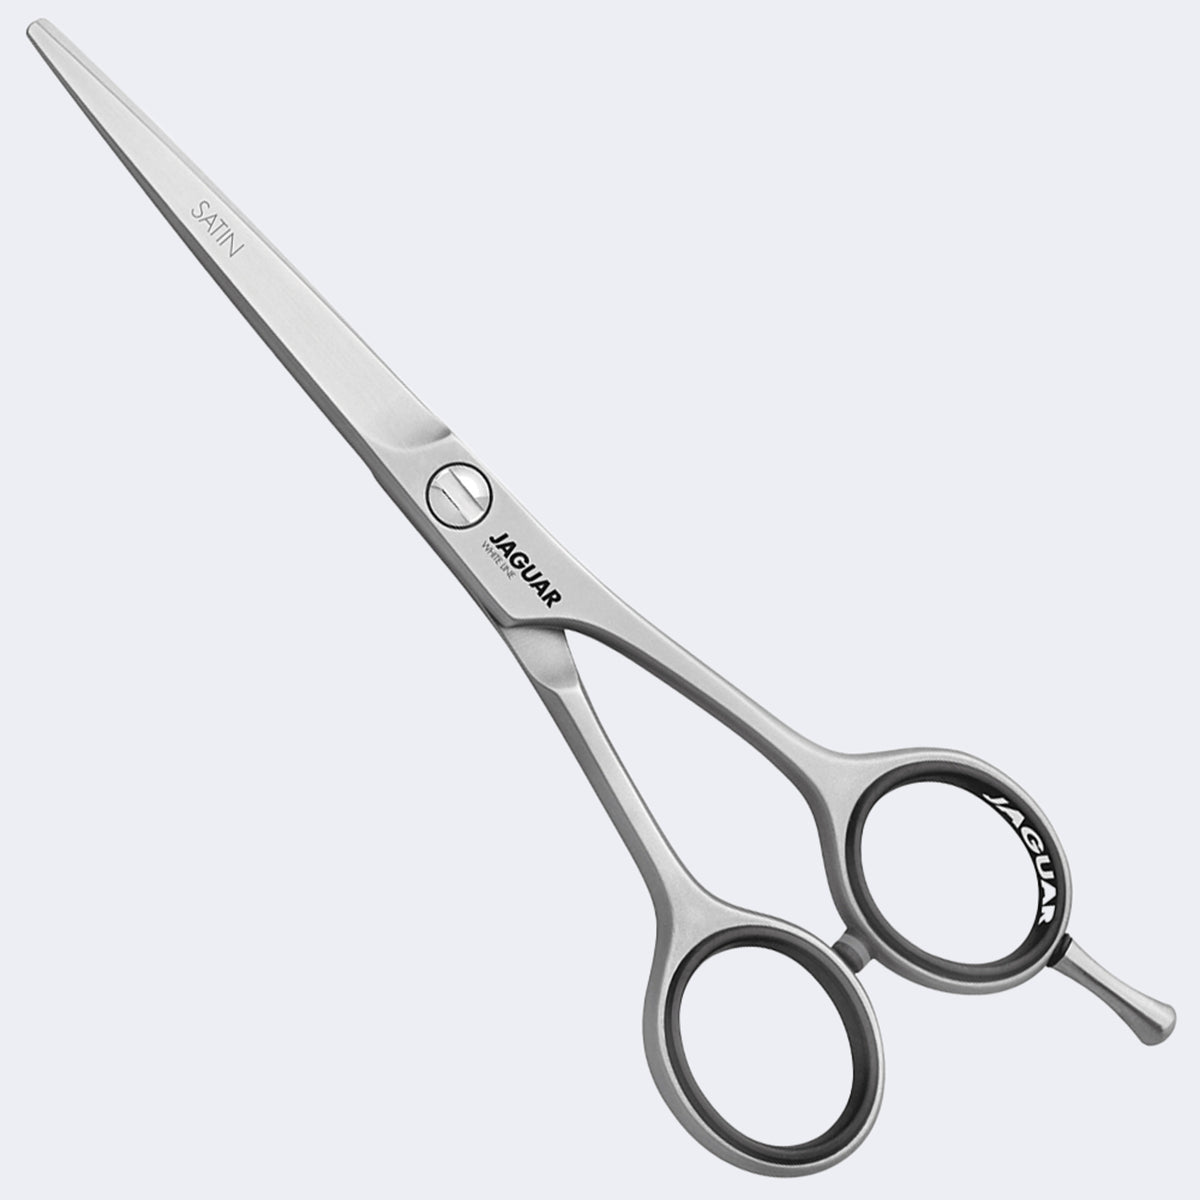 6-1/2" scissors with satin finish